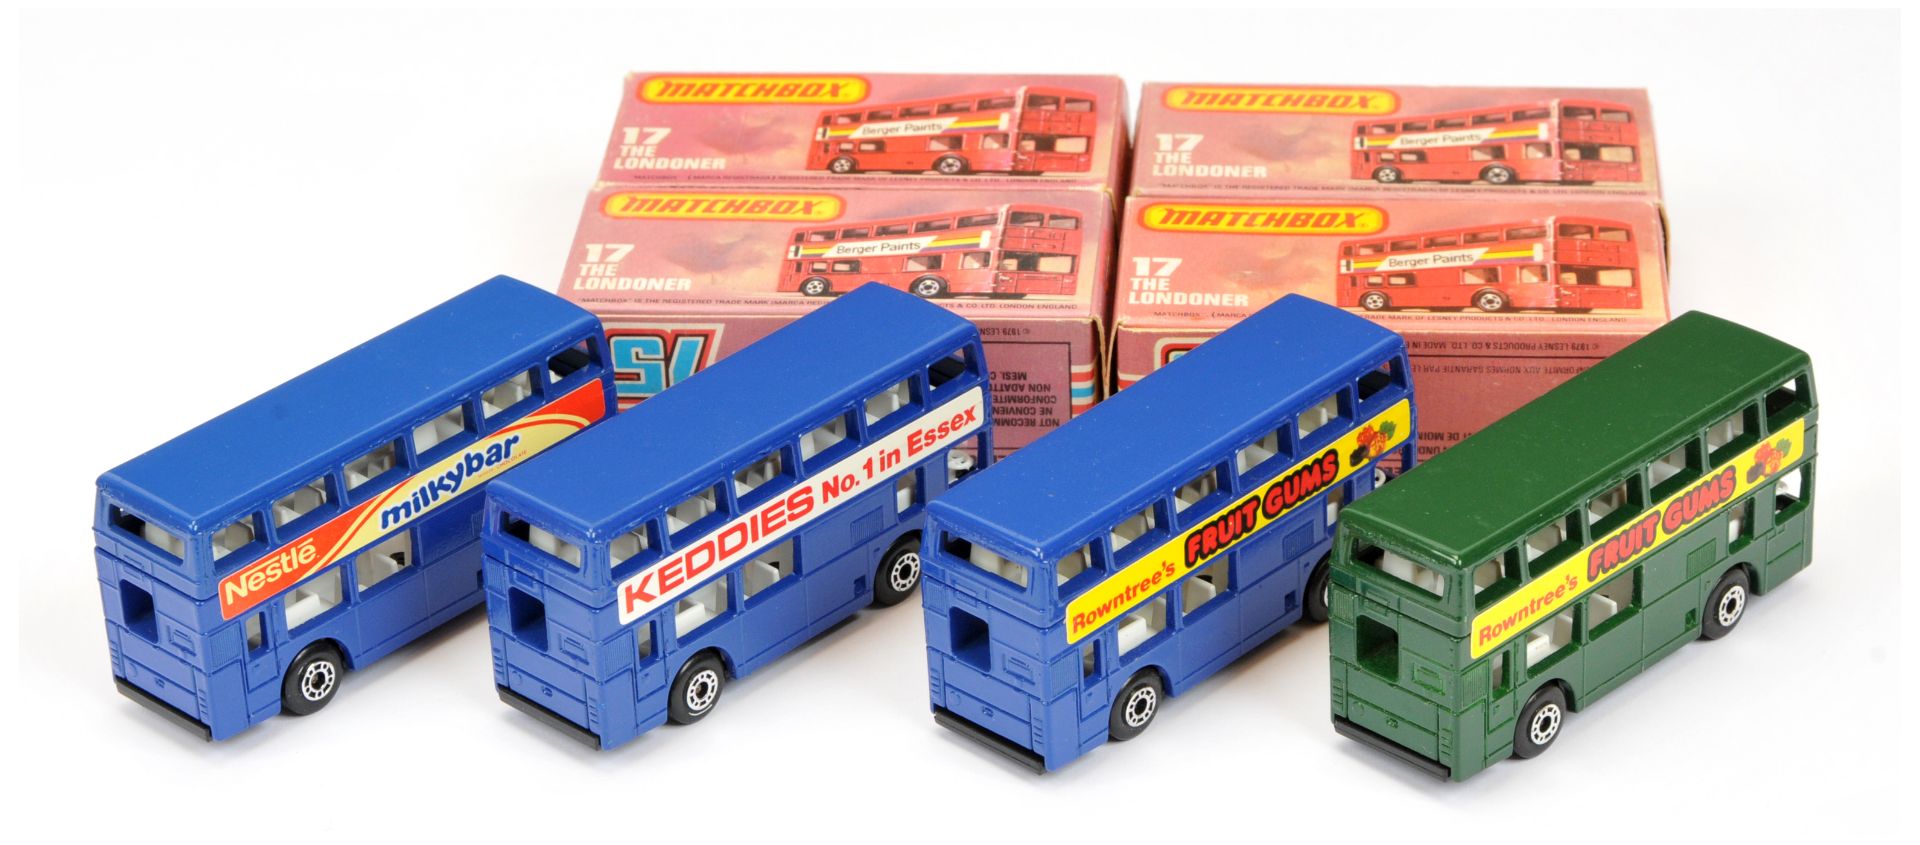 Matchbox Superfast 4 x 17c Leyland Titan Bus - Image 2 of 2